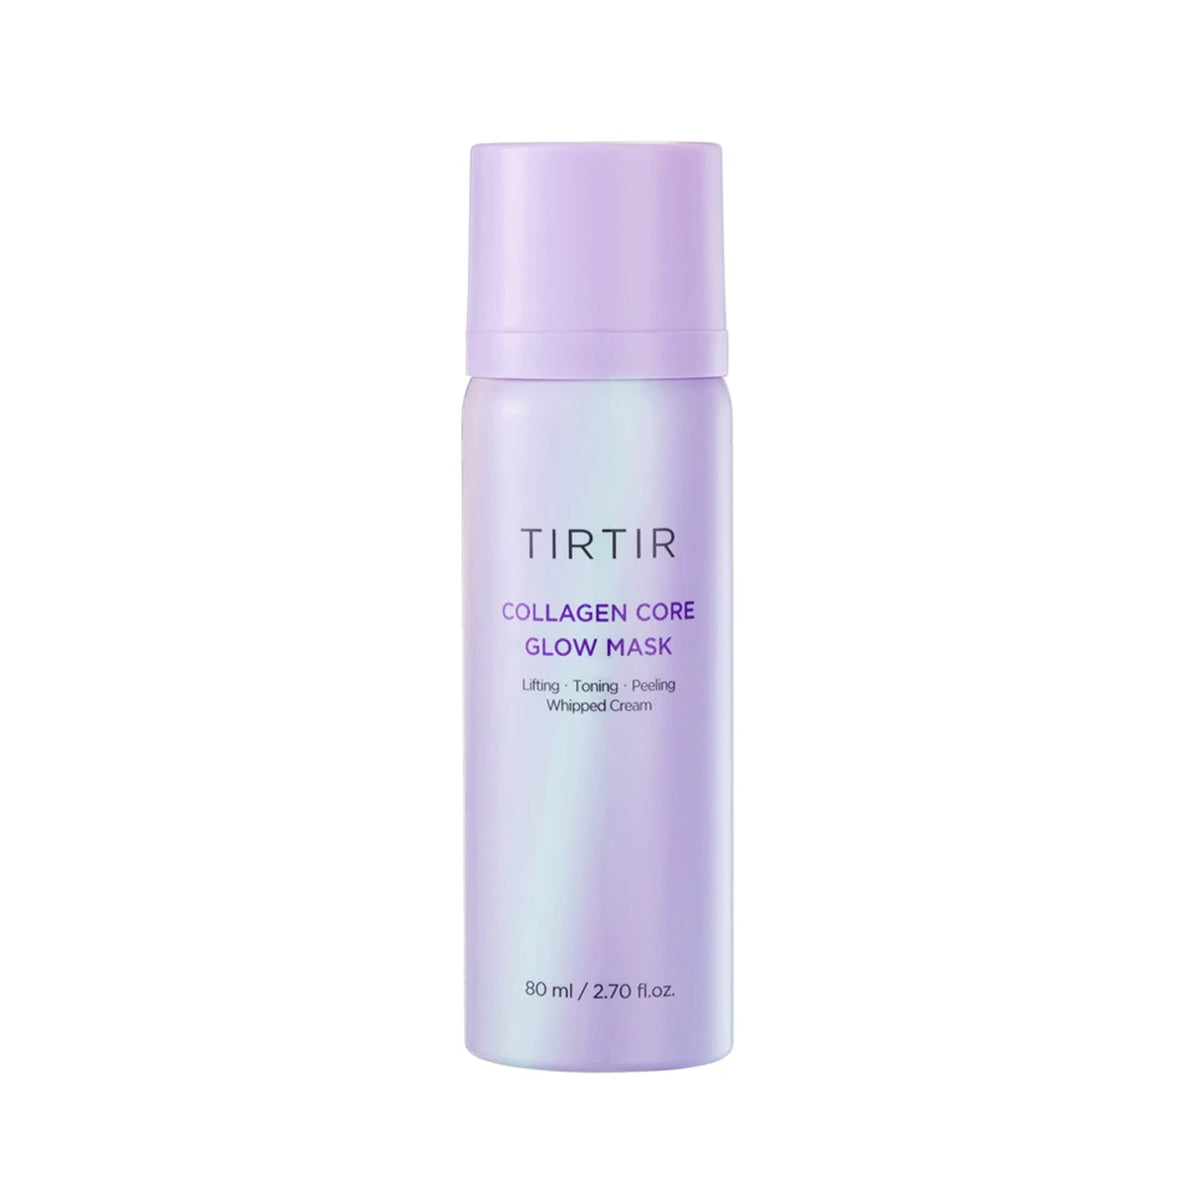 TIRTIR Collagen Core Glow Mask, 80ml / 2.70 fl.oz